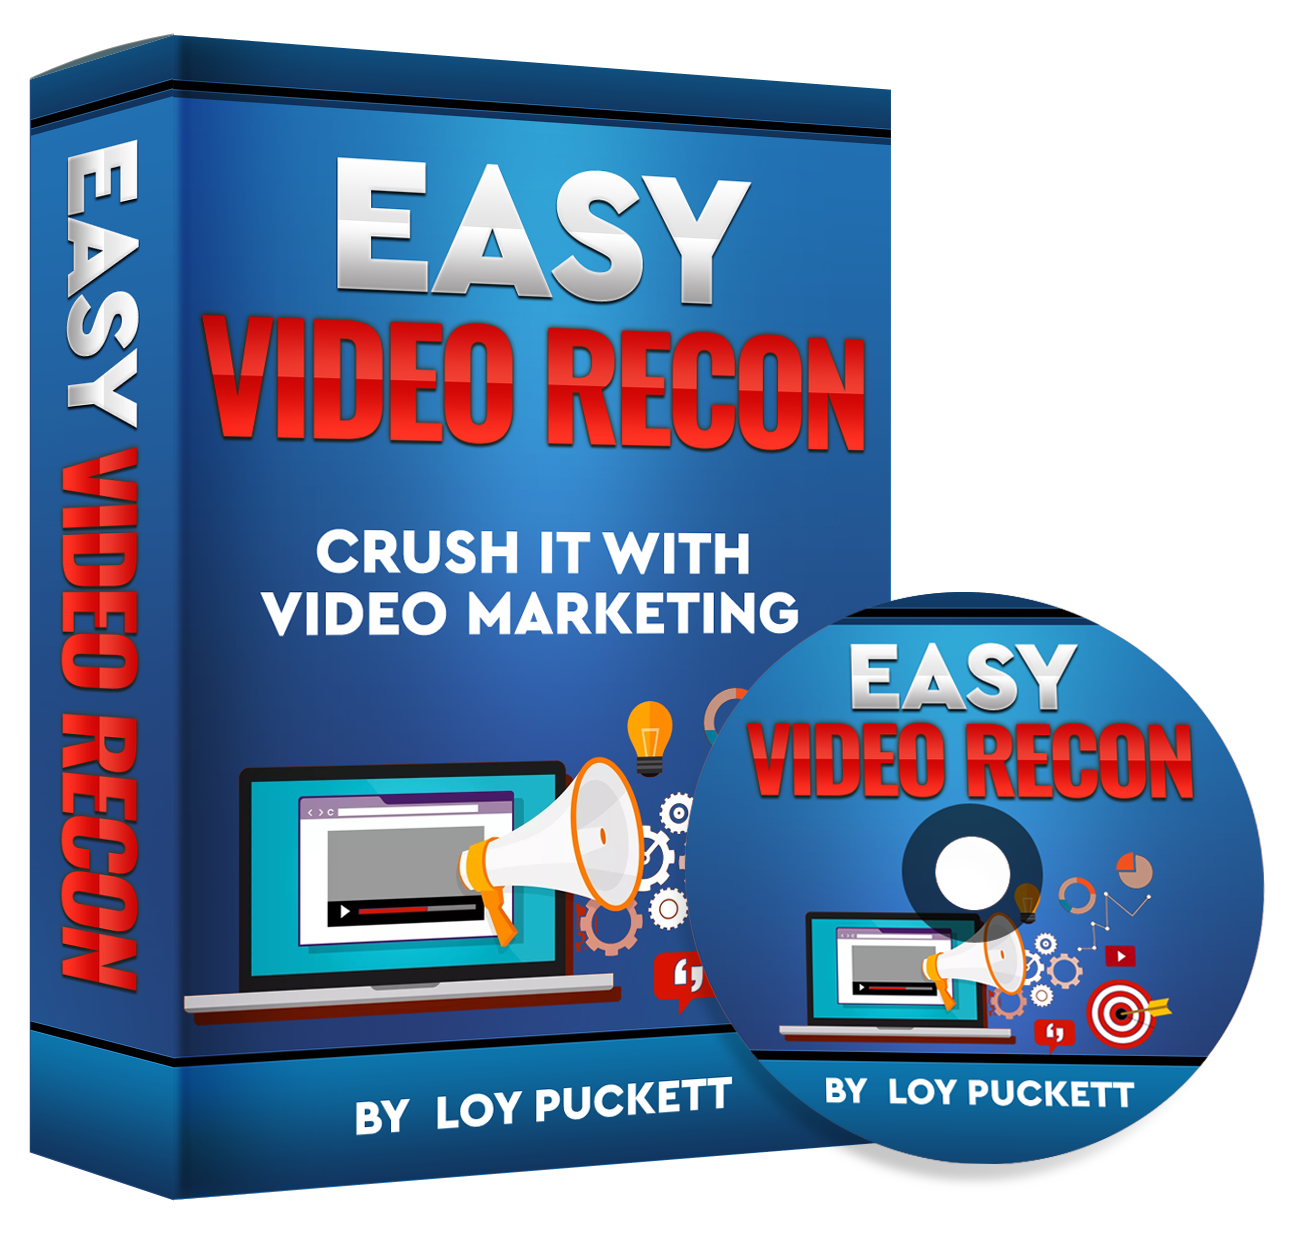 Easy Video Recon